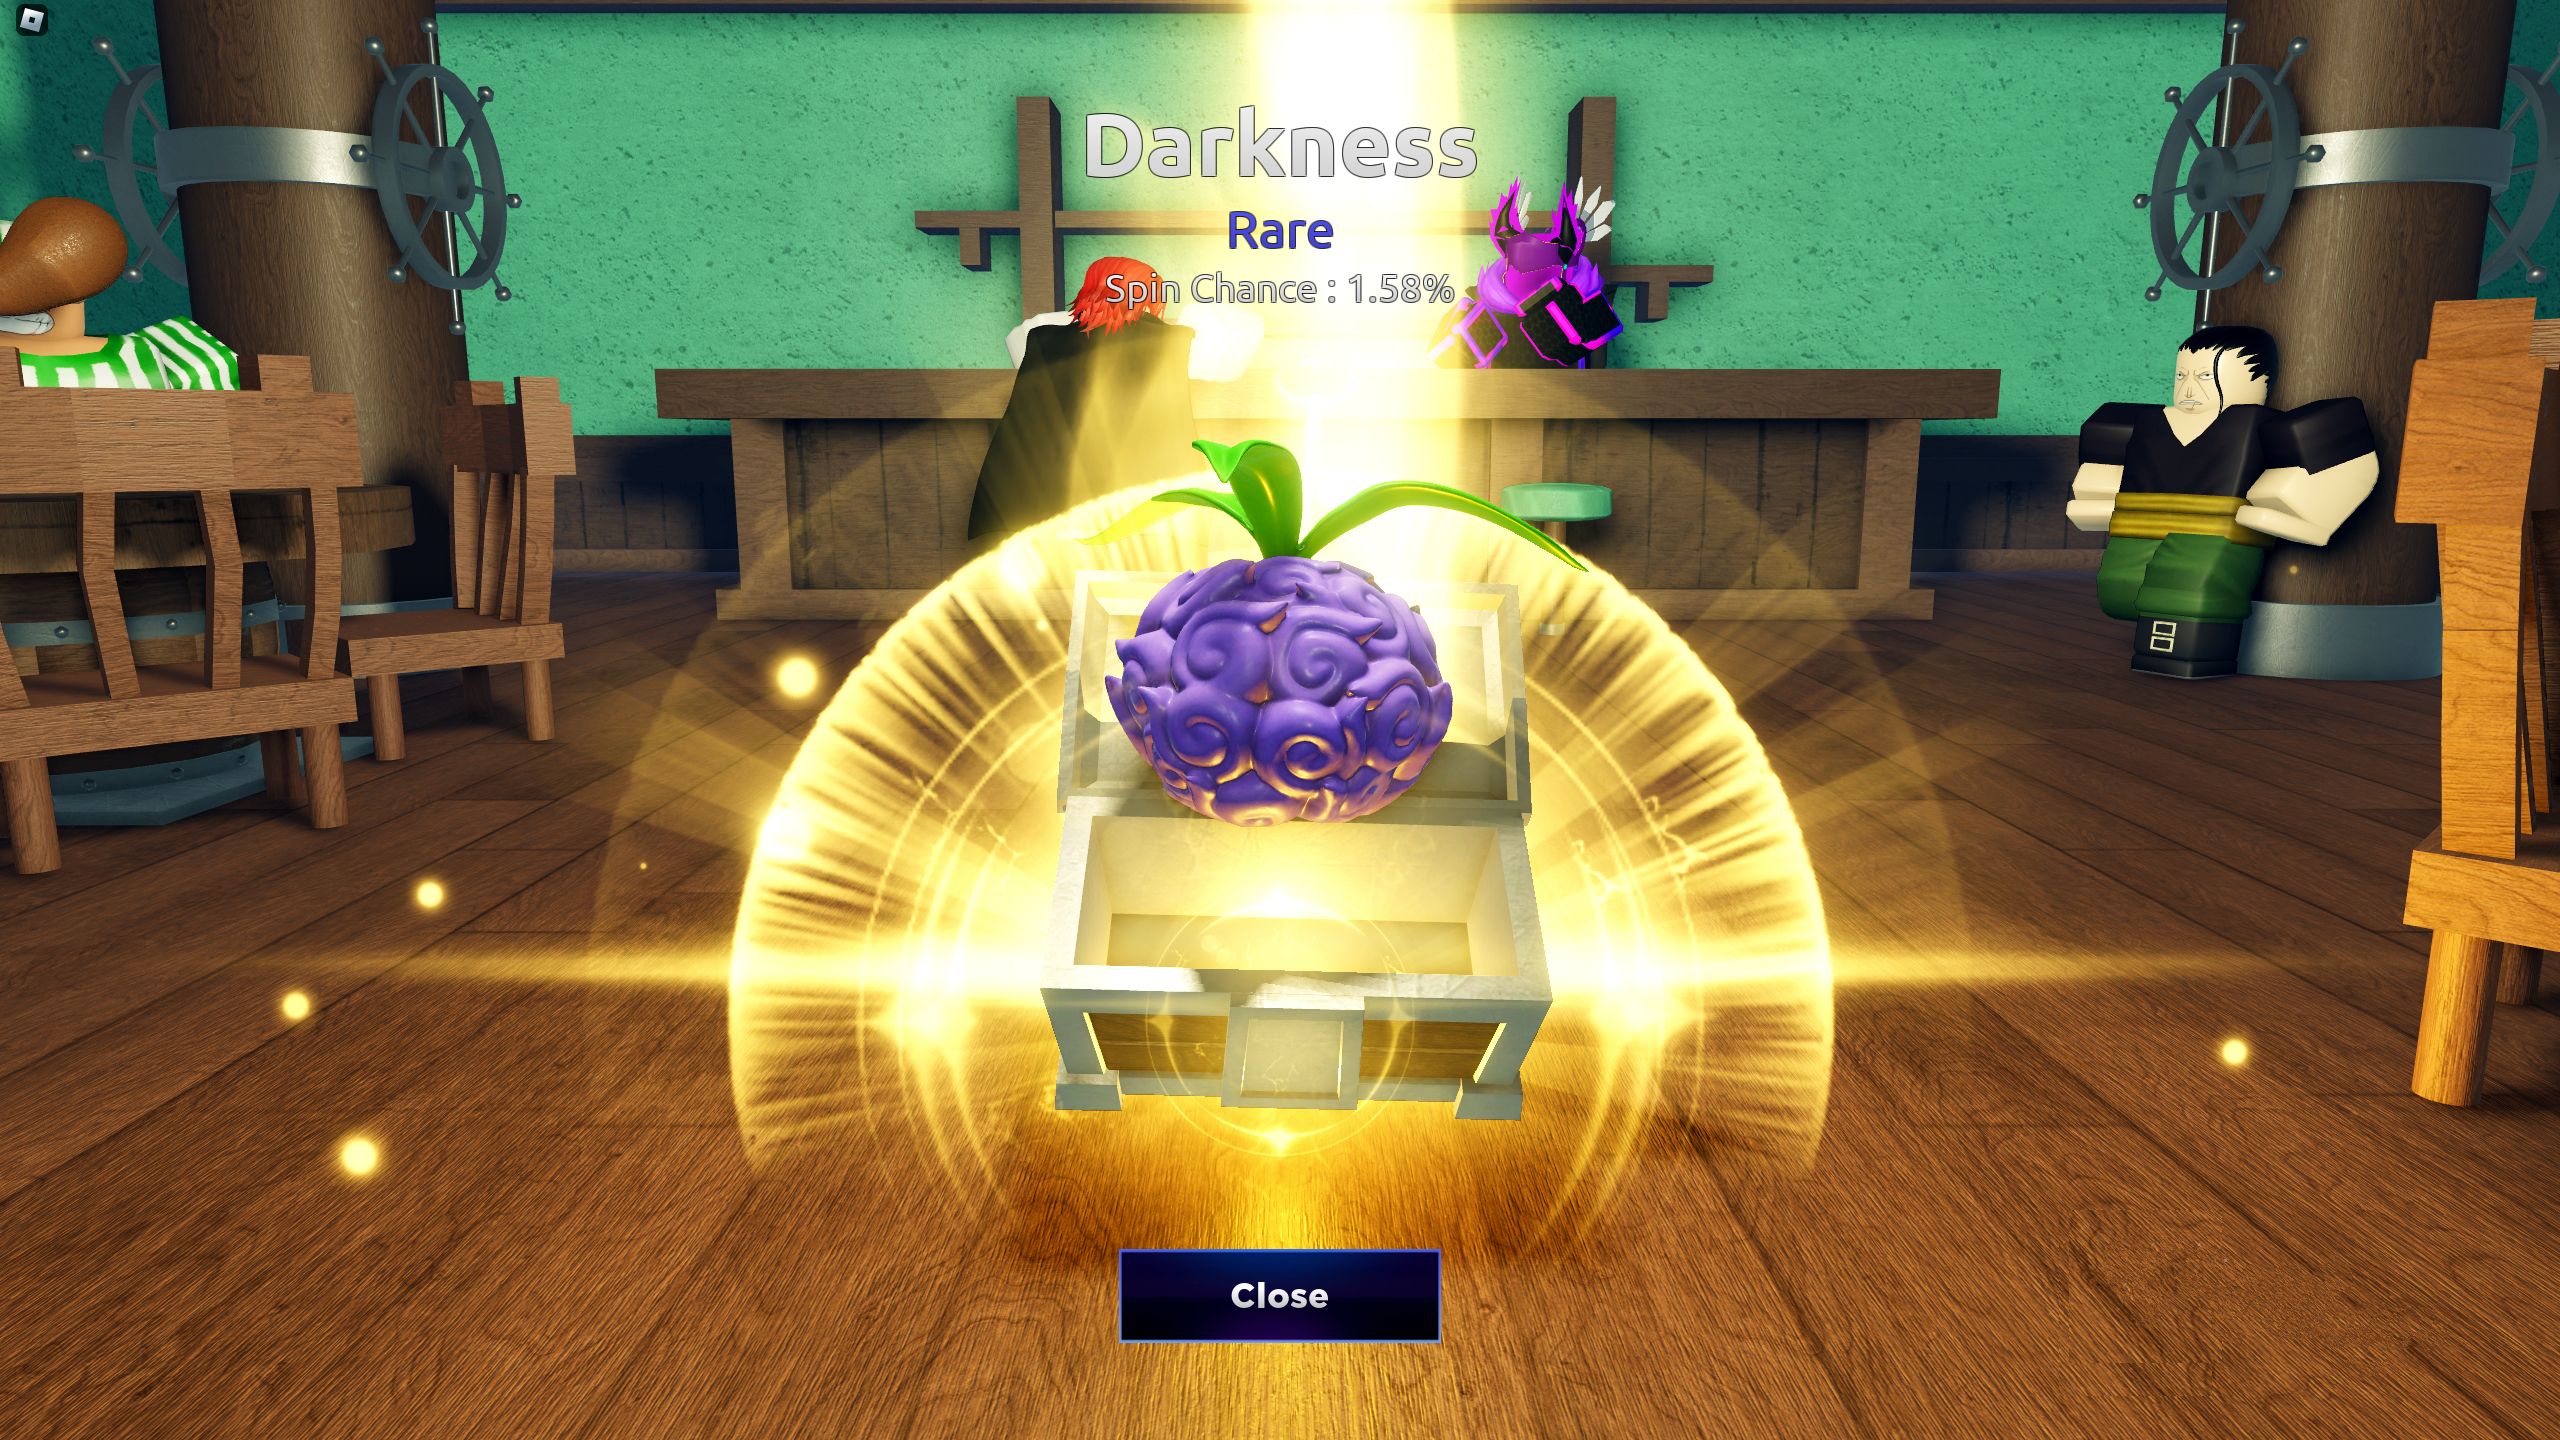 Roblox Fruit Battlegrounds Player Unlocking Rare Darkness Fruit Through Fruit Spin